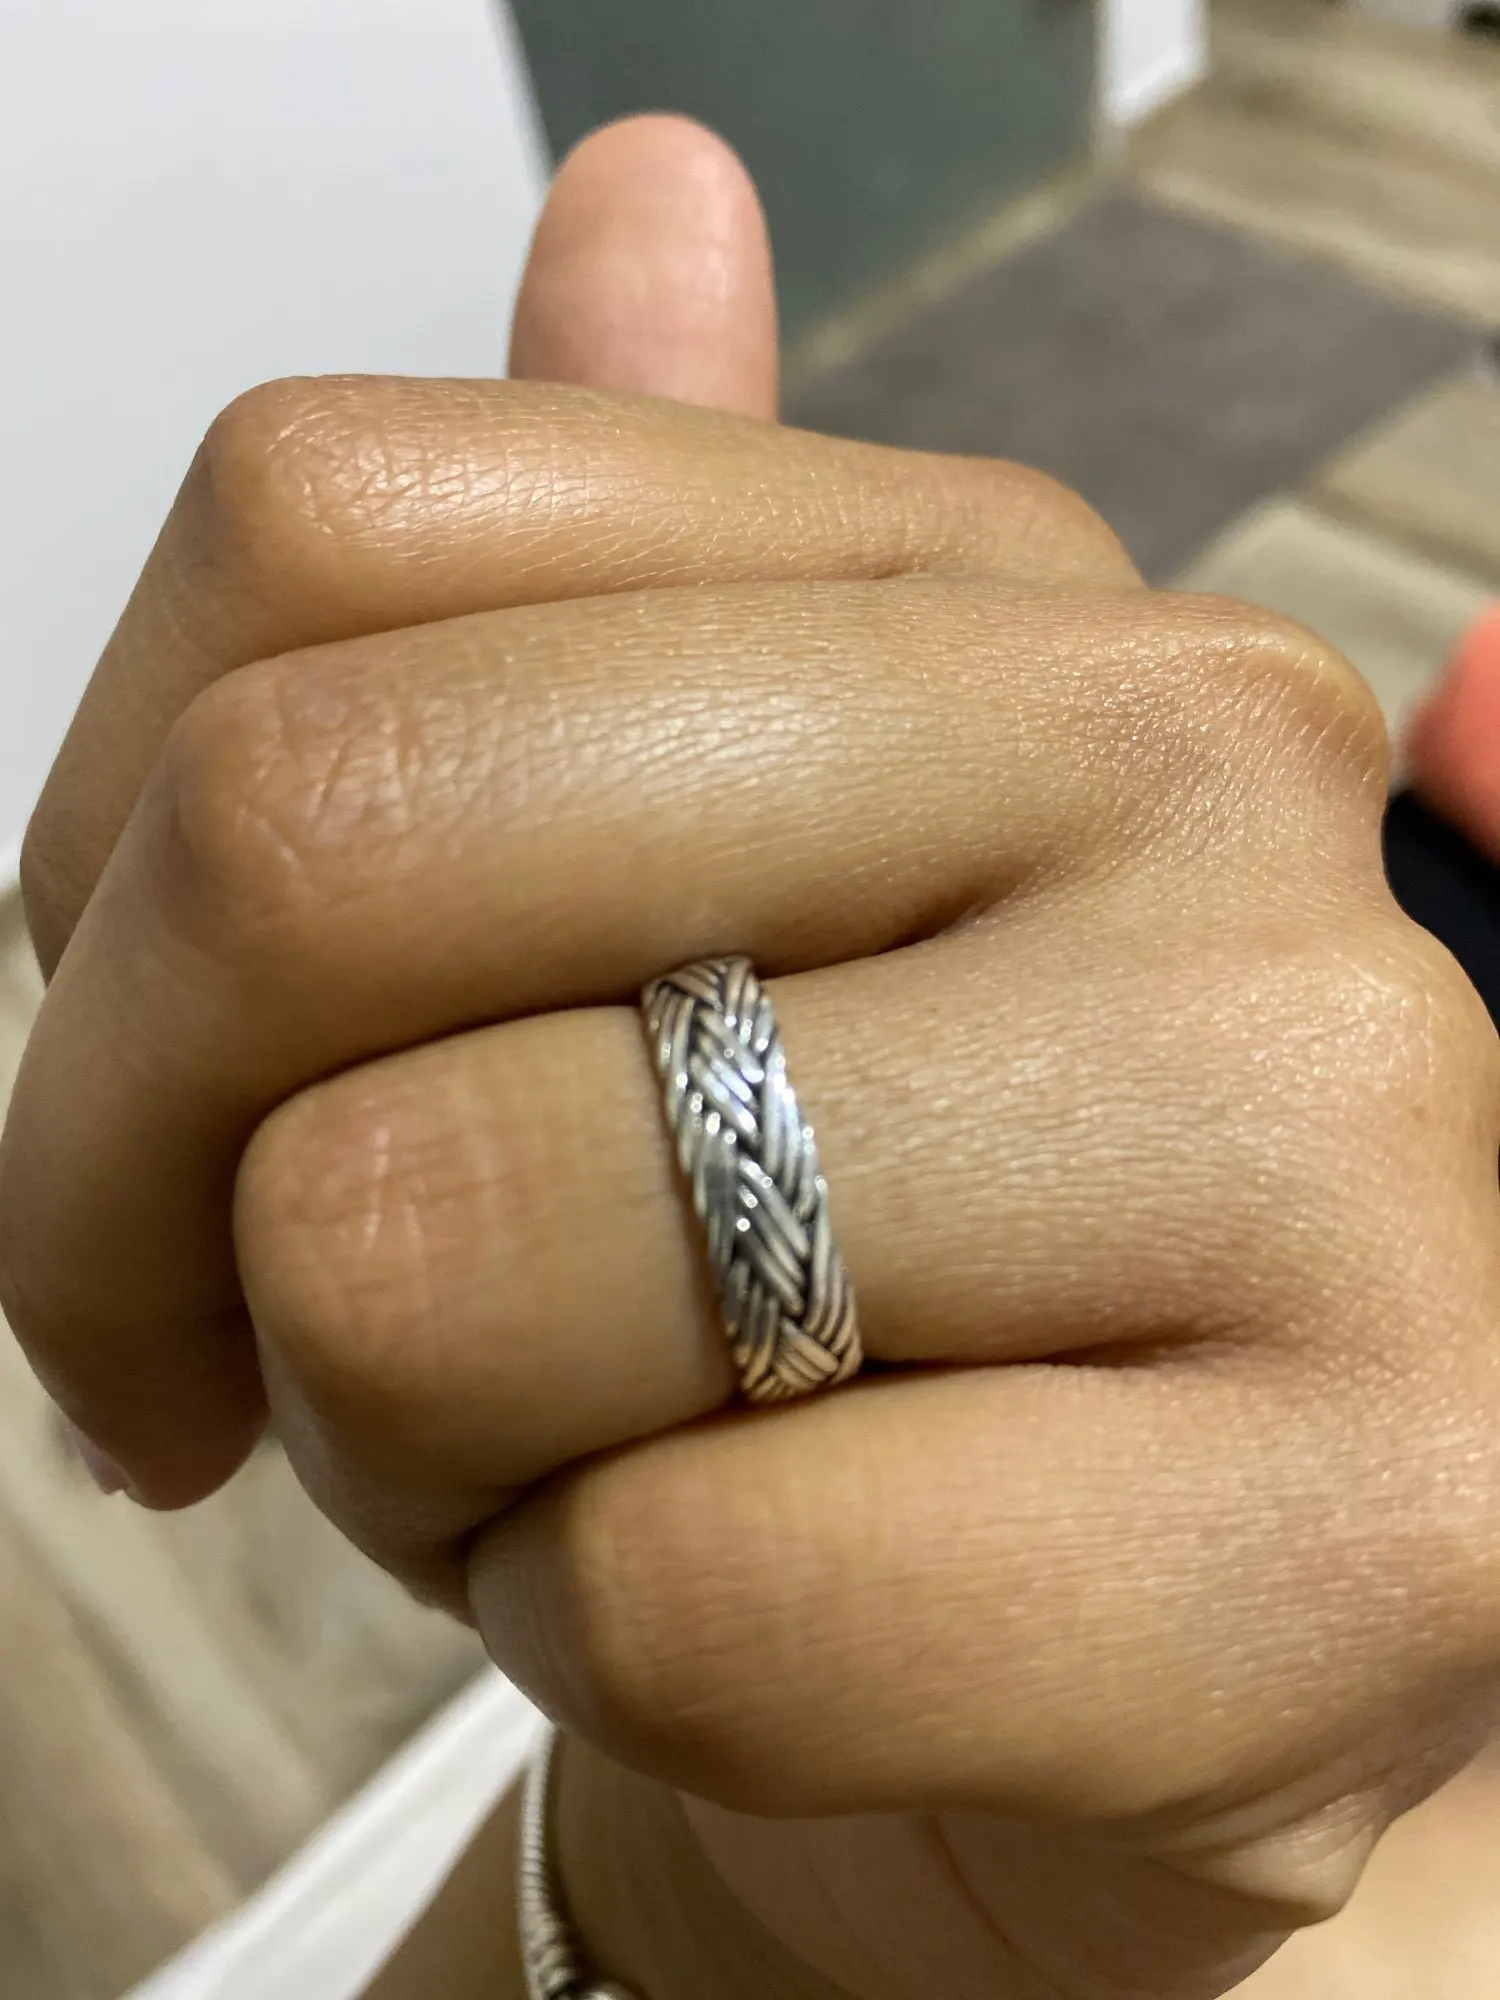 925 Silver Vintage Twist Rings For Women Men Wedding Jewelry Adjustable Ring